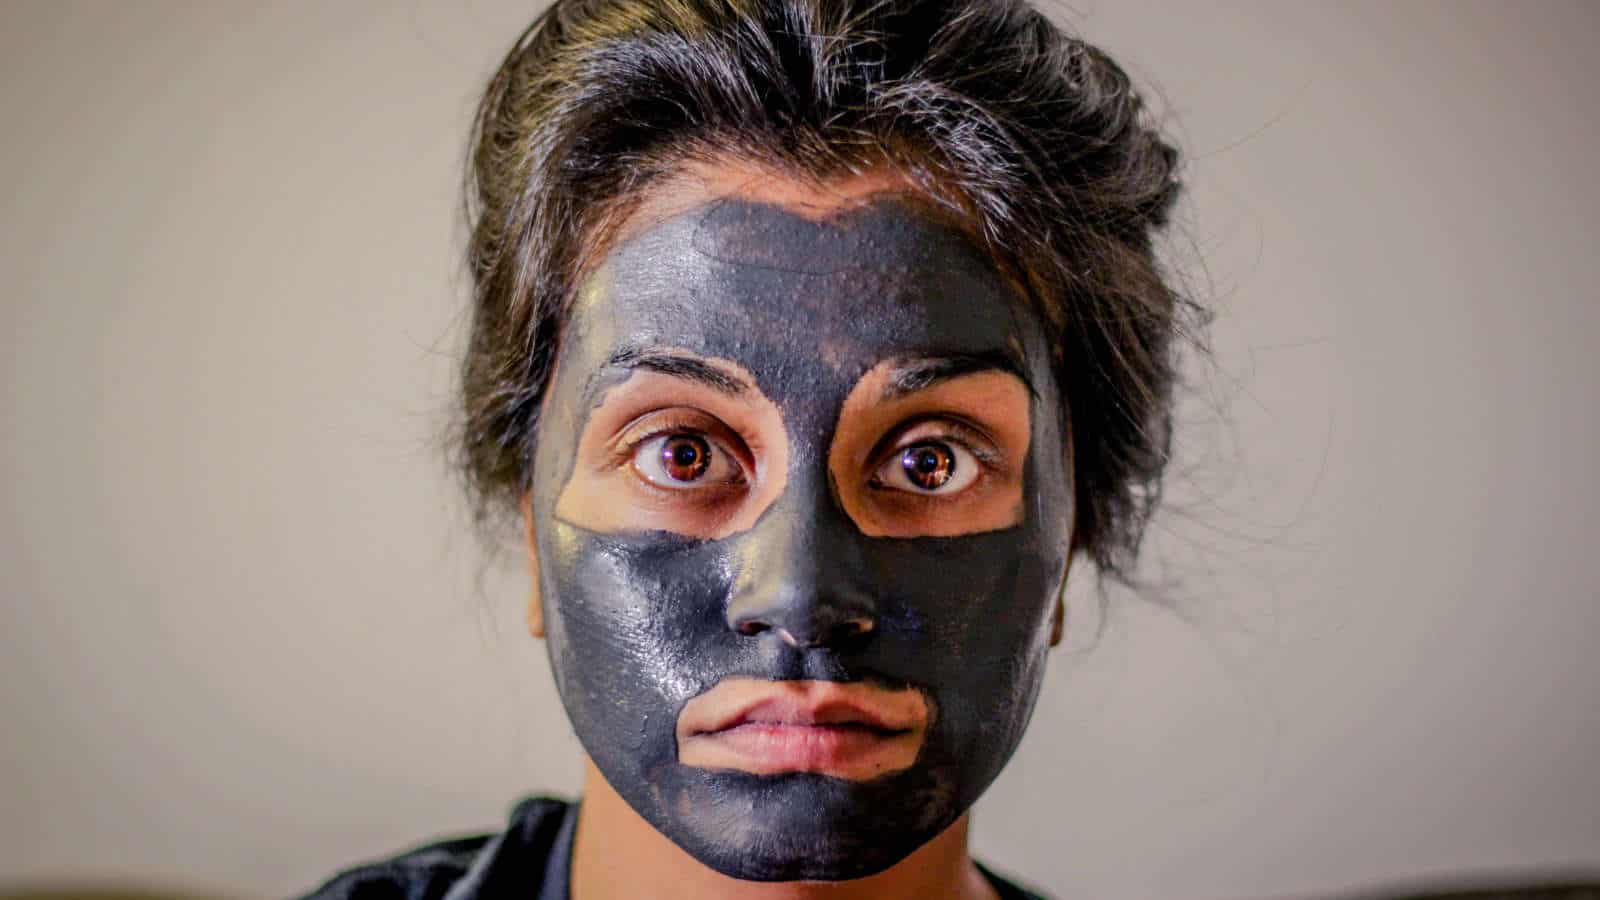 Blackhead Maske selber machen: Ultimative DIY-Anleitung